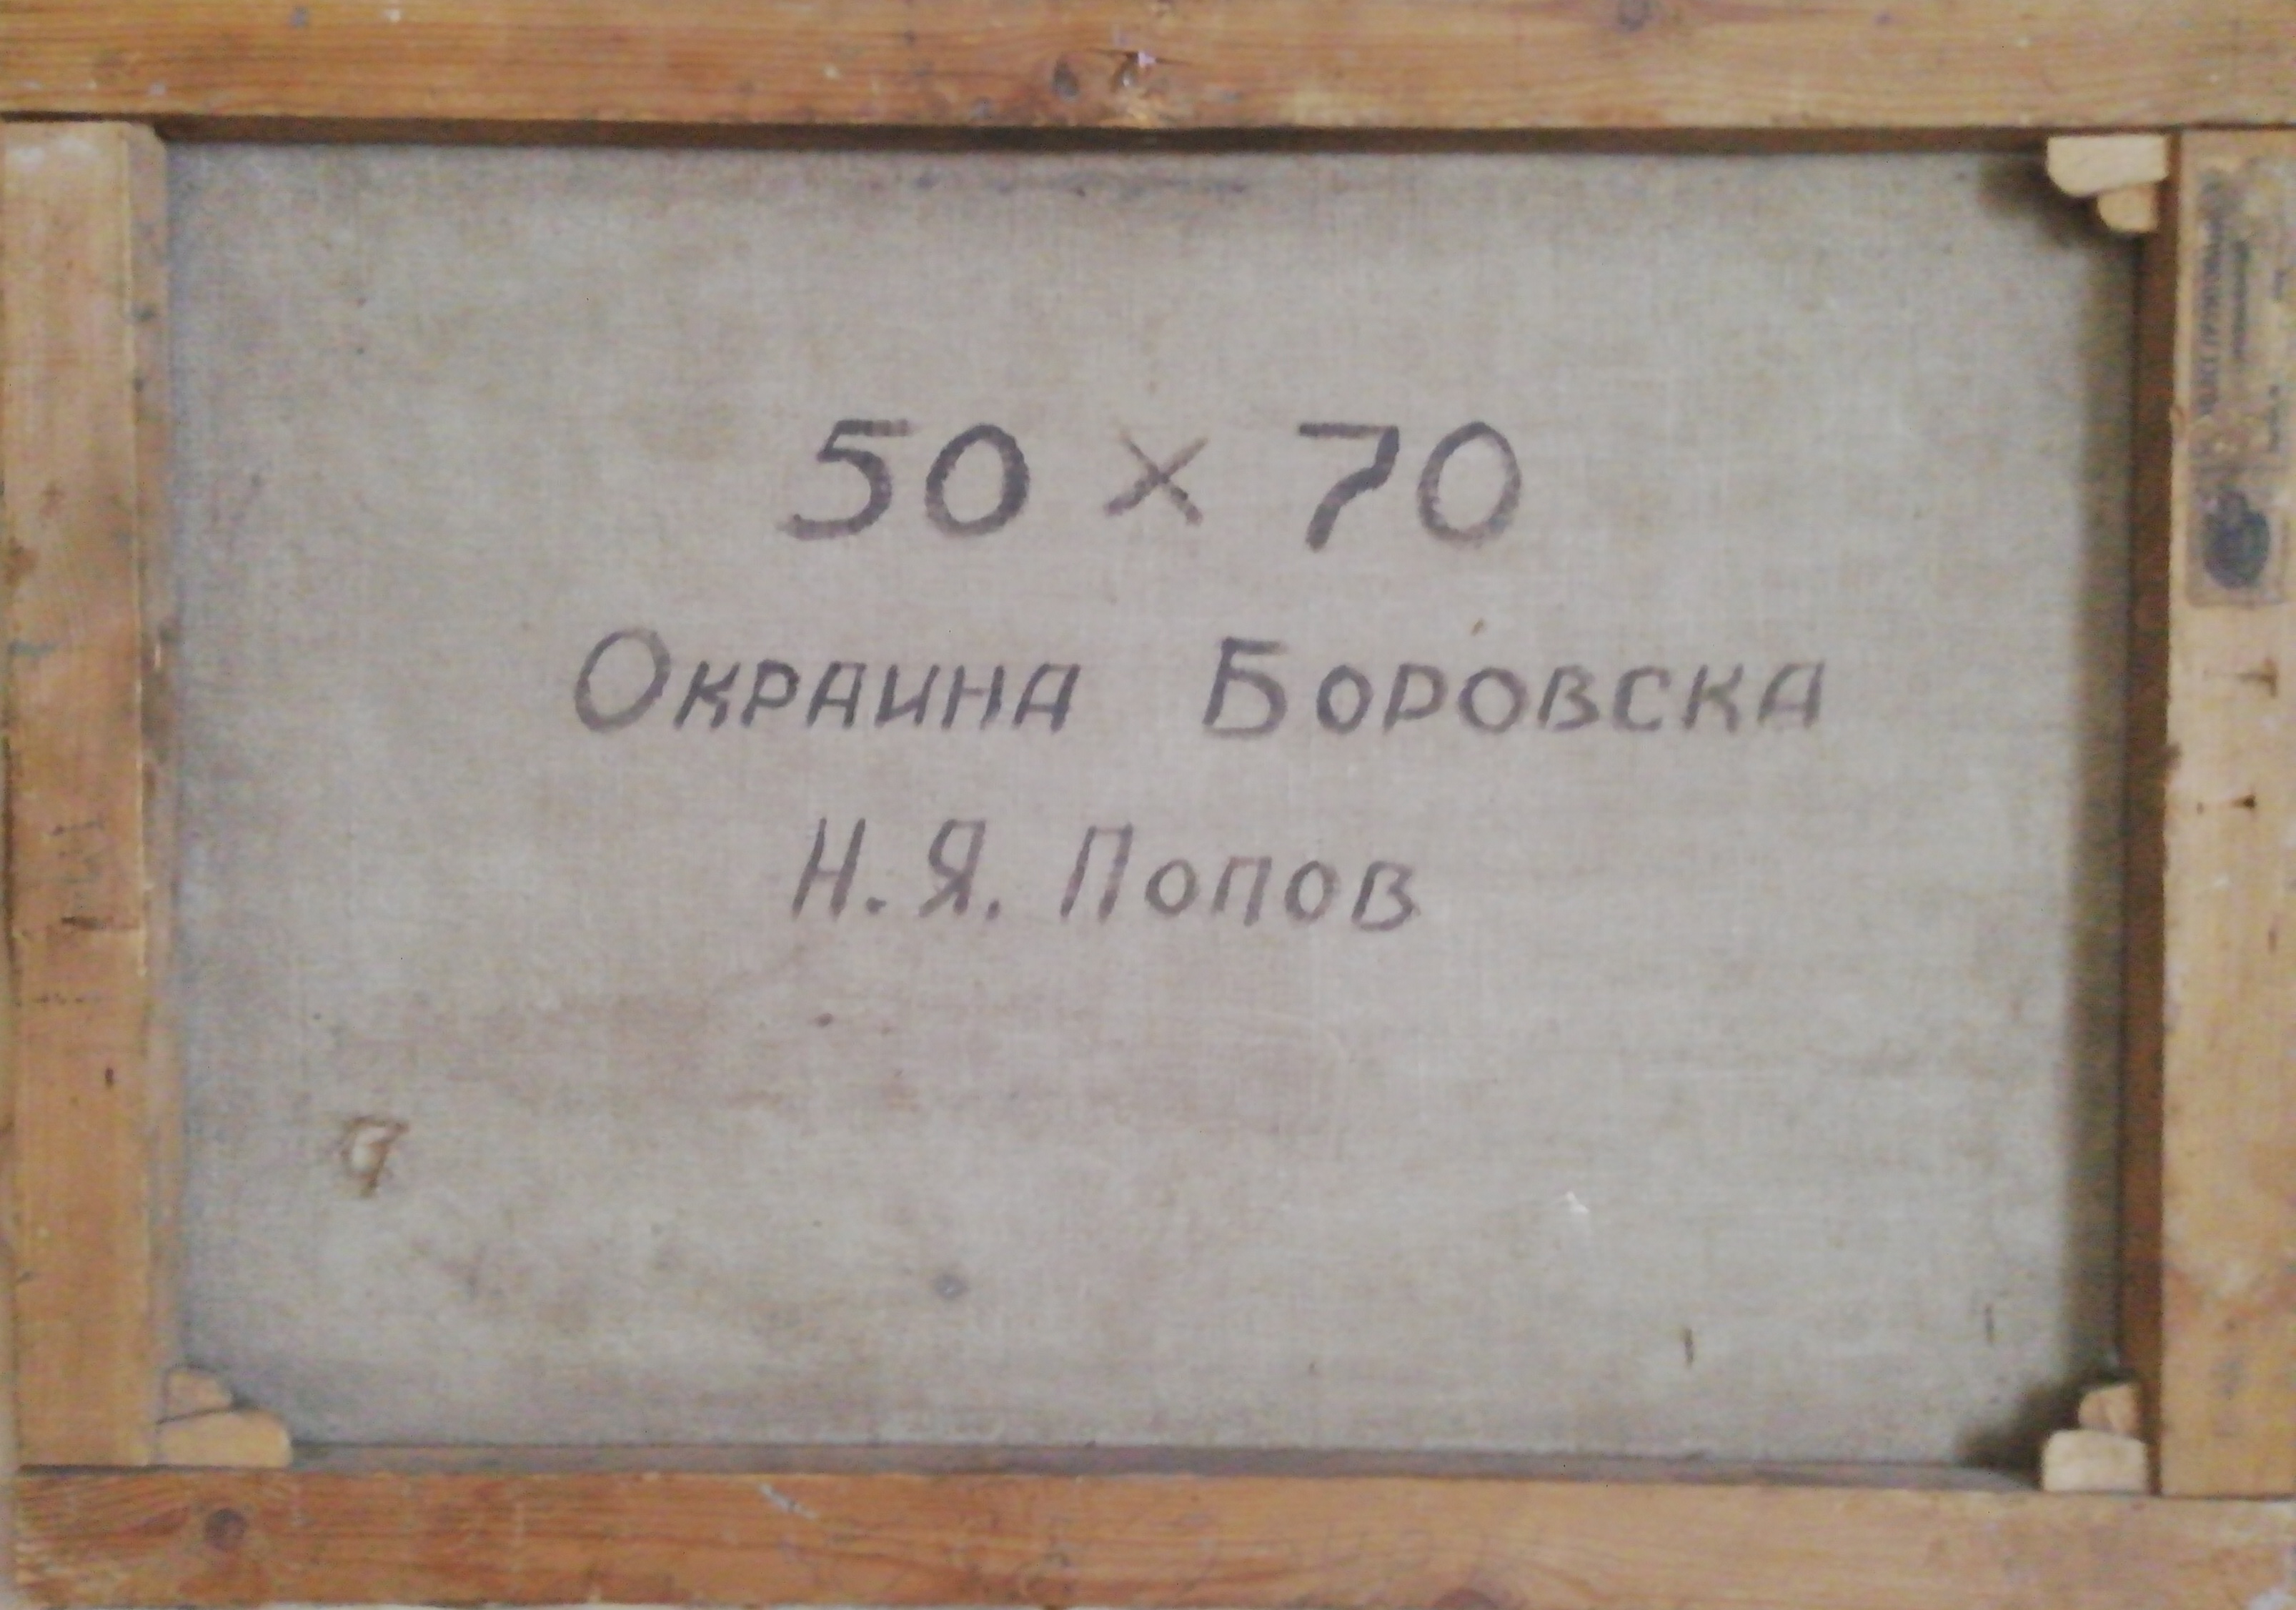 Окраина Боровска 50-70 см., холст, масло  - 2